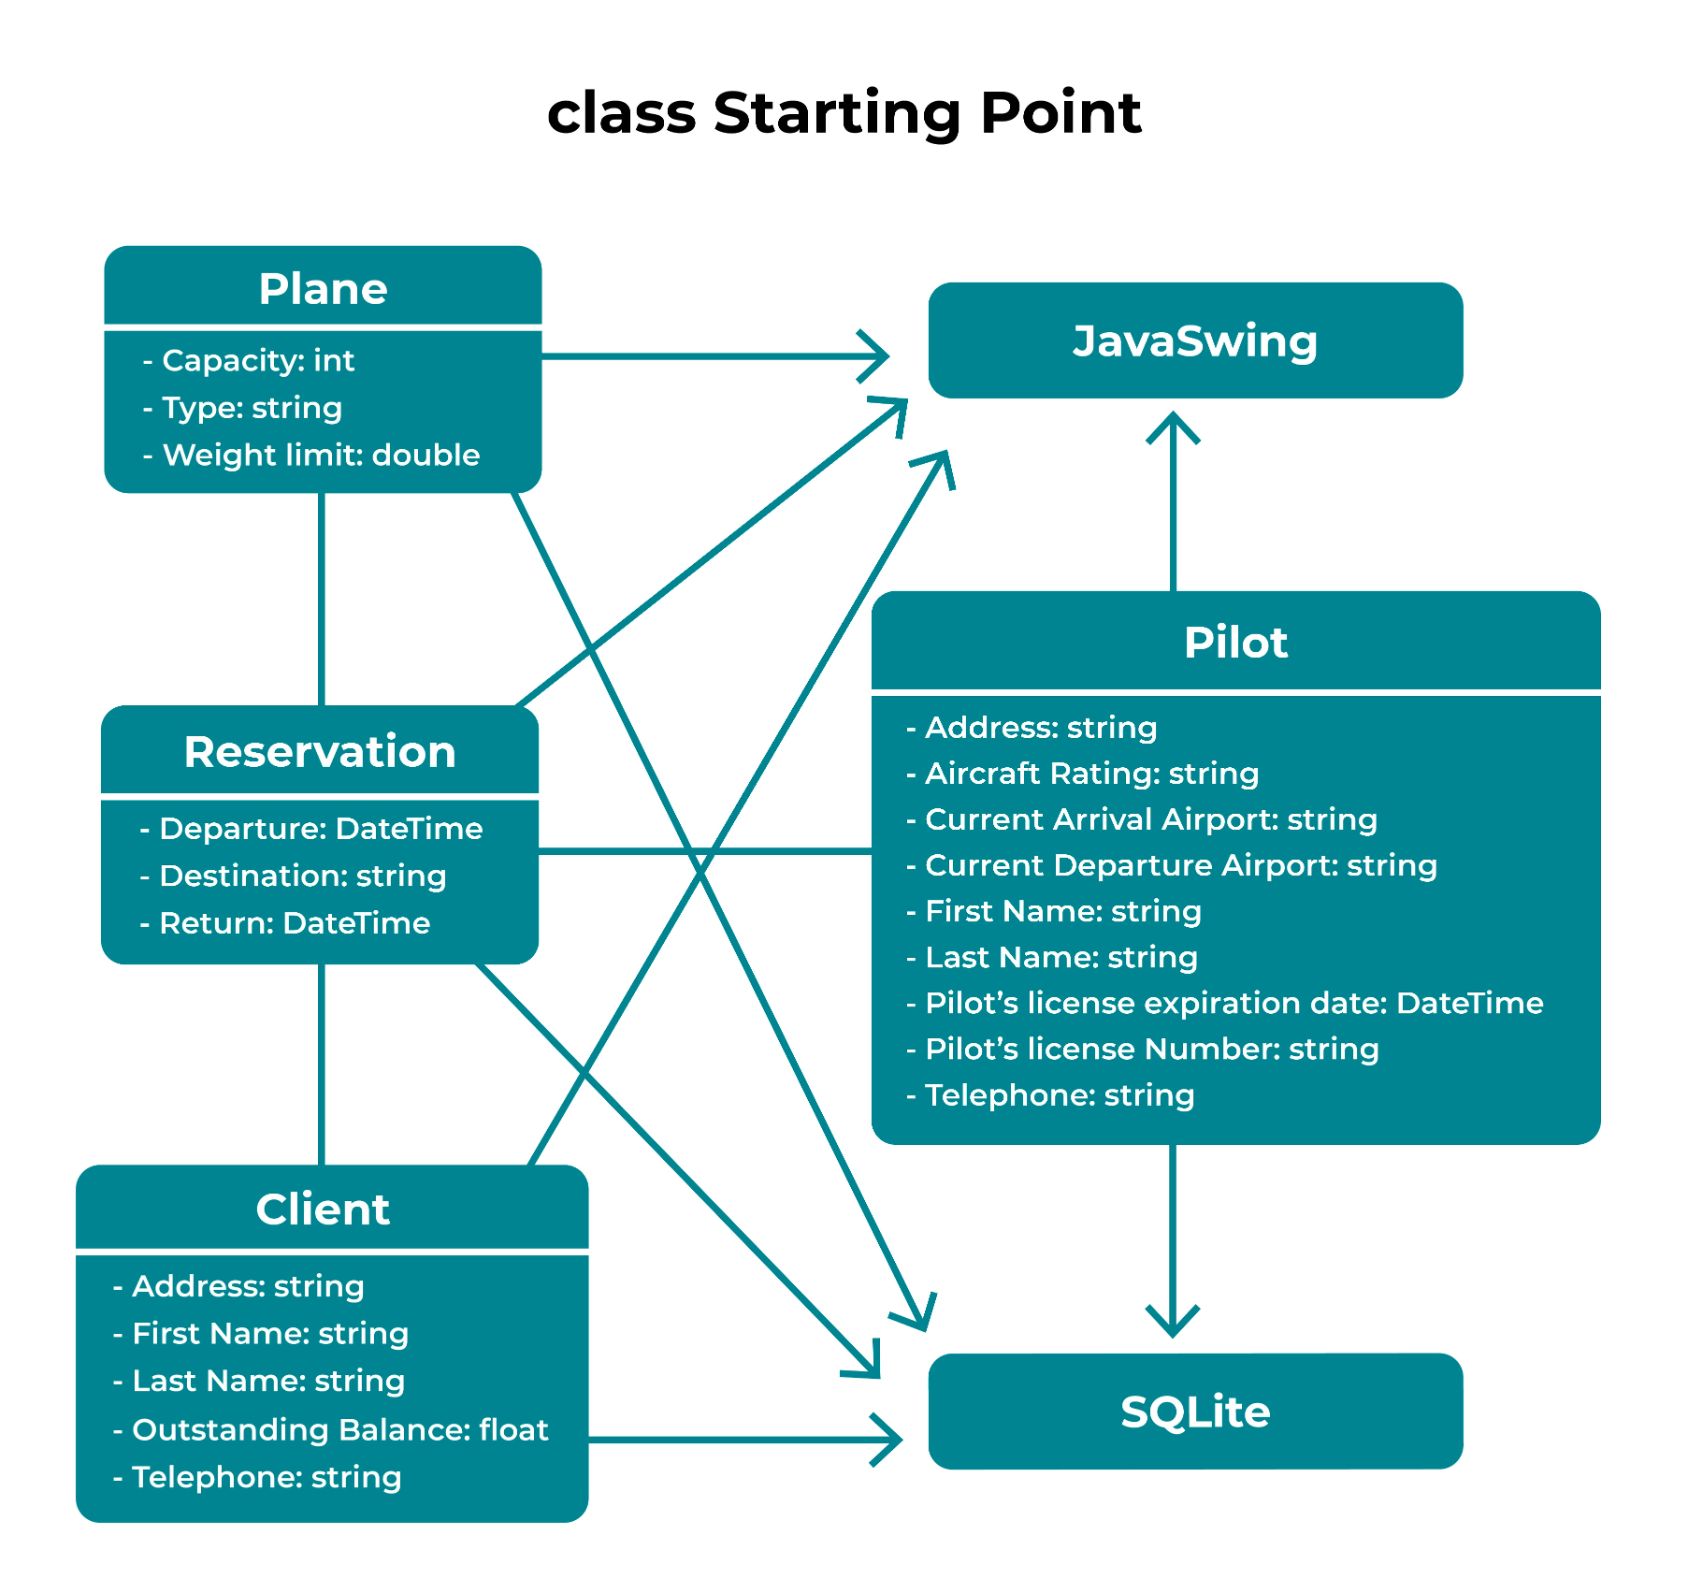 Architecture Diagram with classes (Javaswing, Plane, reservation, client, SQLite, Pilot)